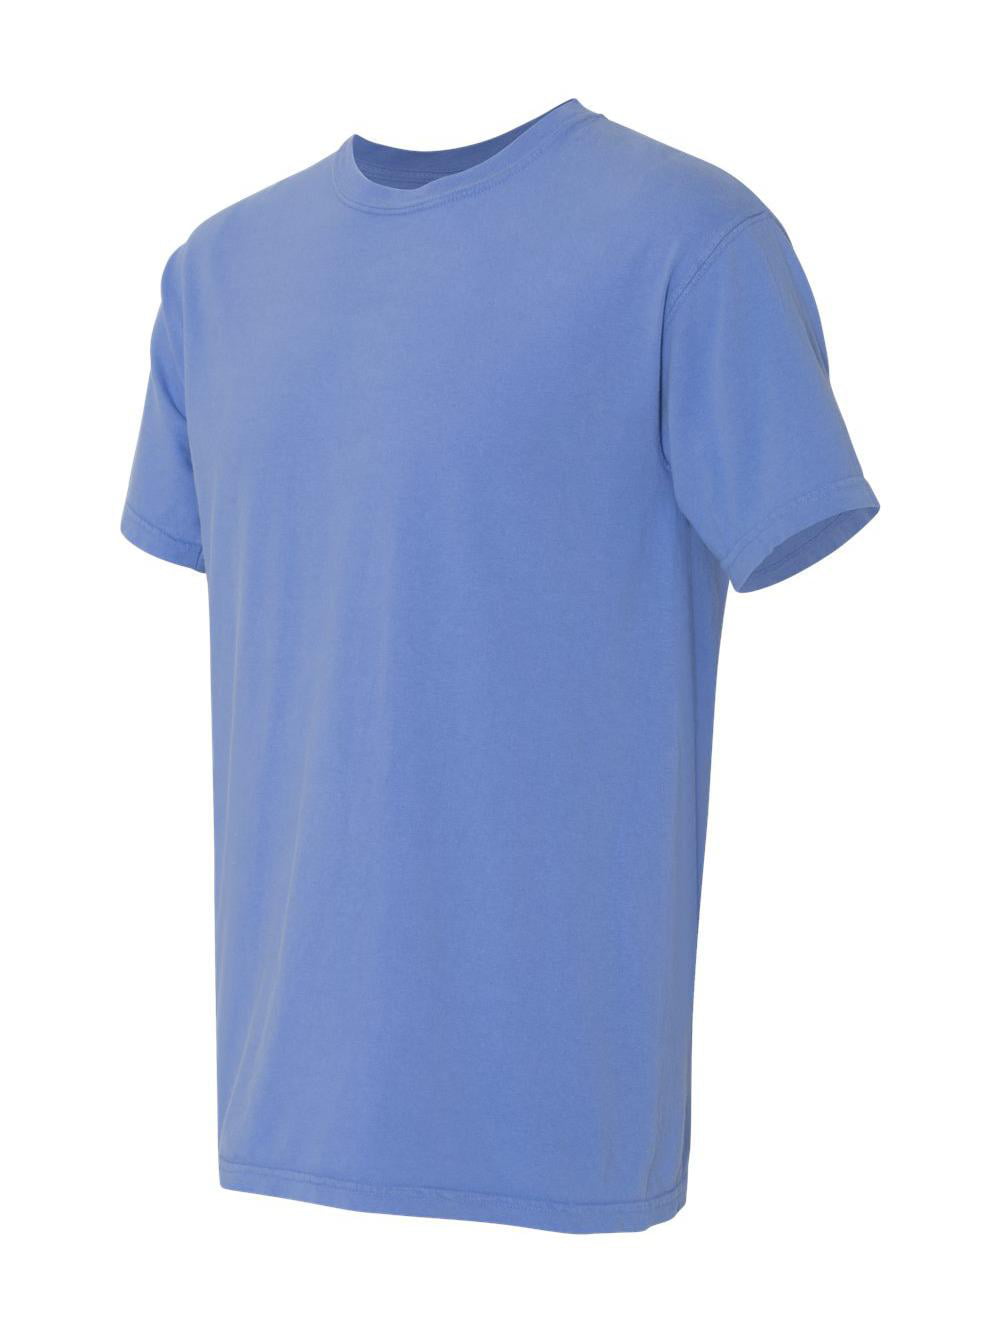 Comfort Colors photography Mustard Shirt mockup Garment Dyed Heavyweight Ringspun Short Sleeve Shirt 1717 flat lay